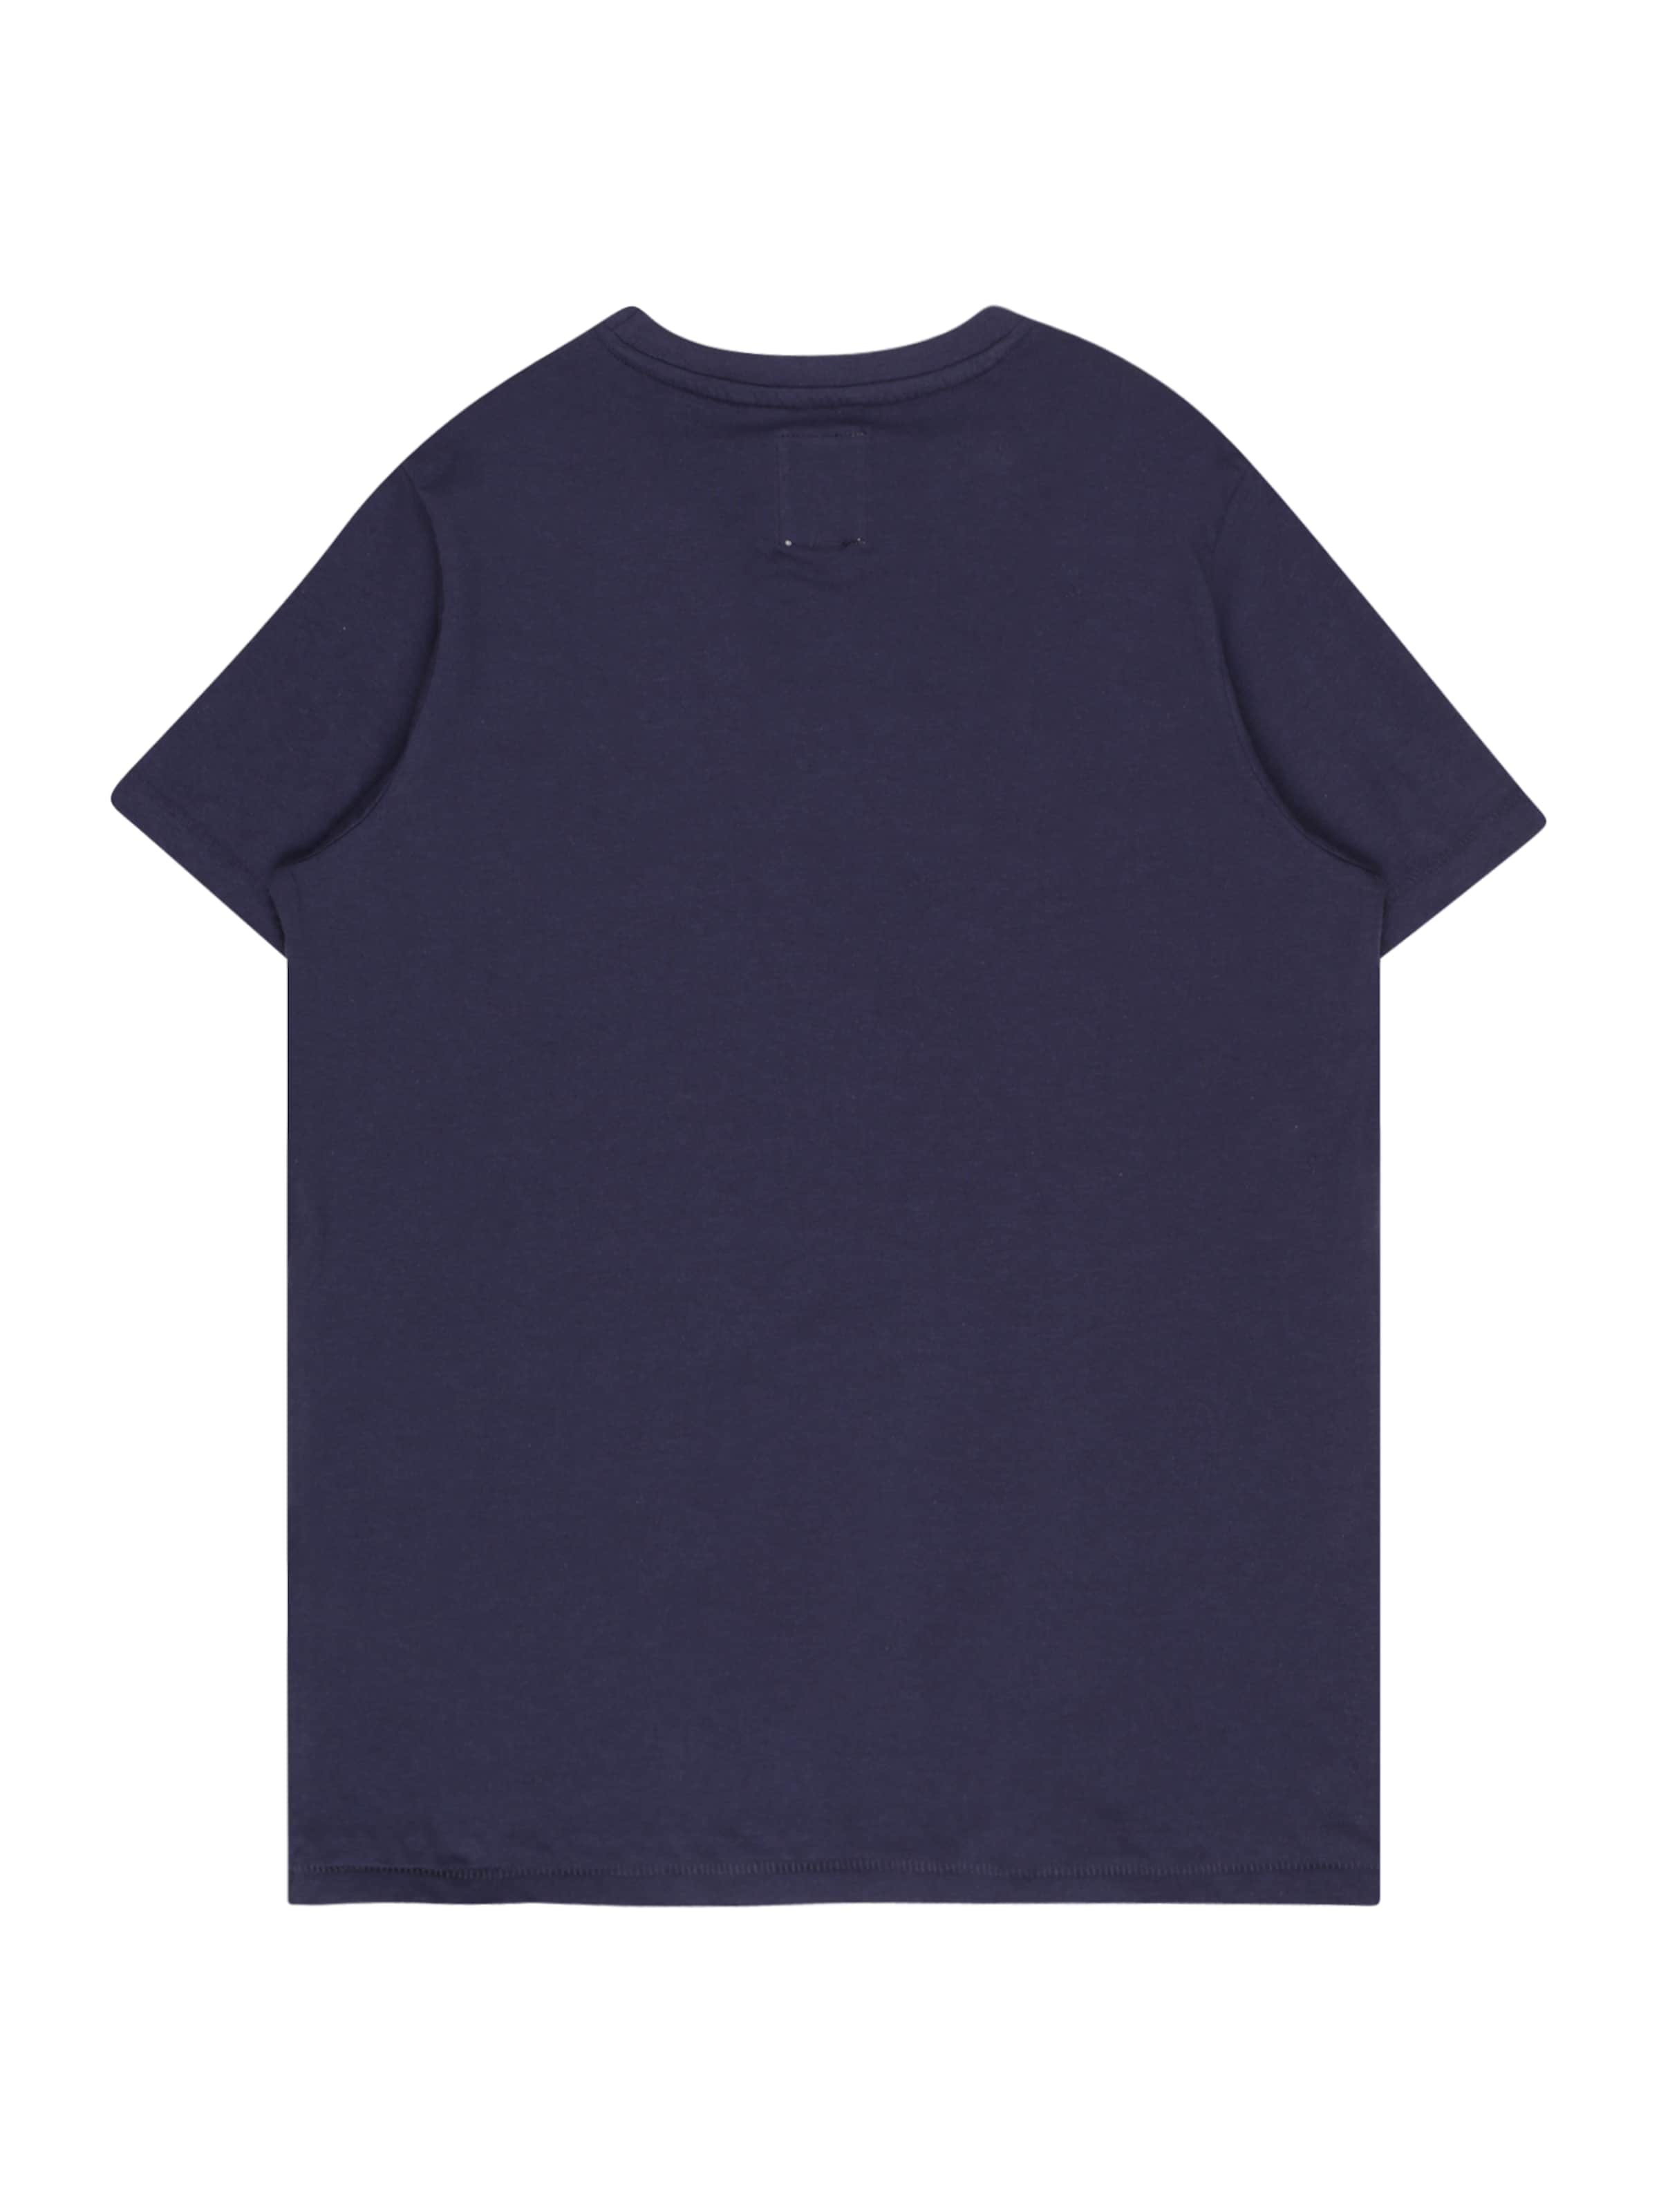 Kinder Teens (Gr. 140-176) GARCIA Shirt in Blau - BZ18255